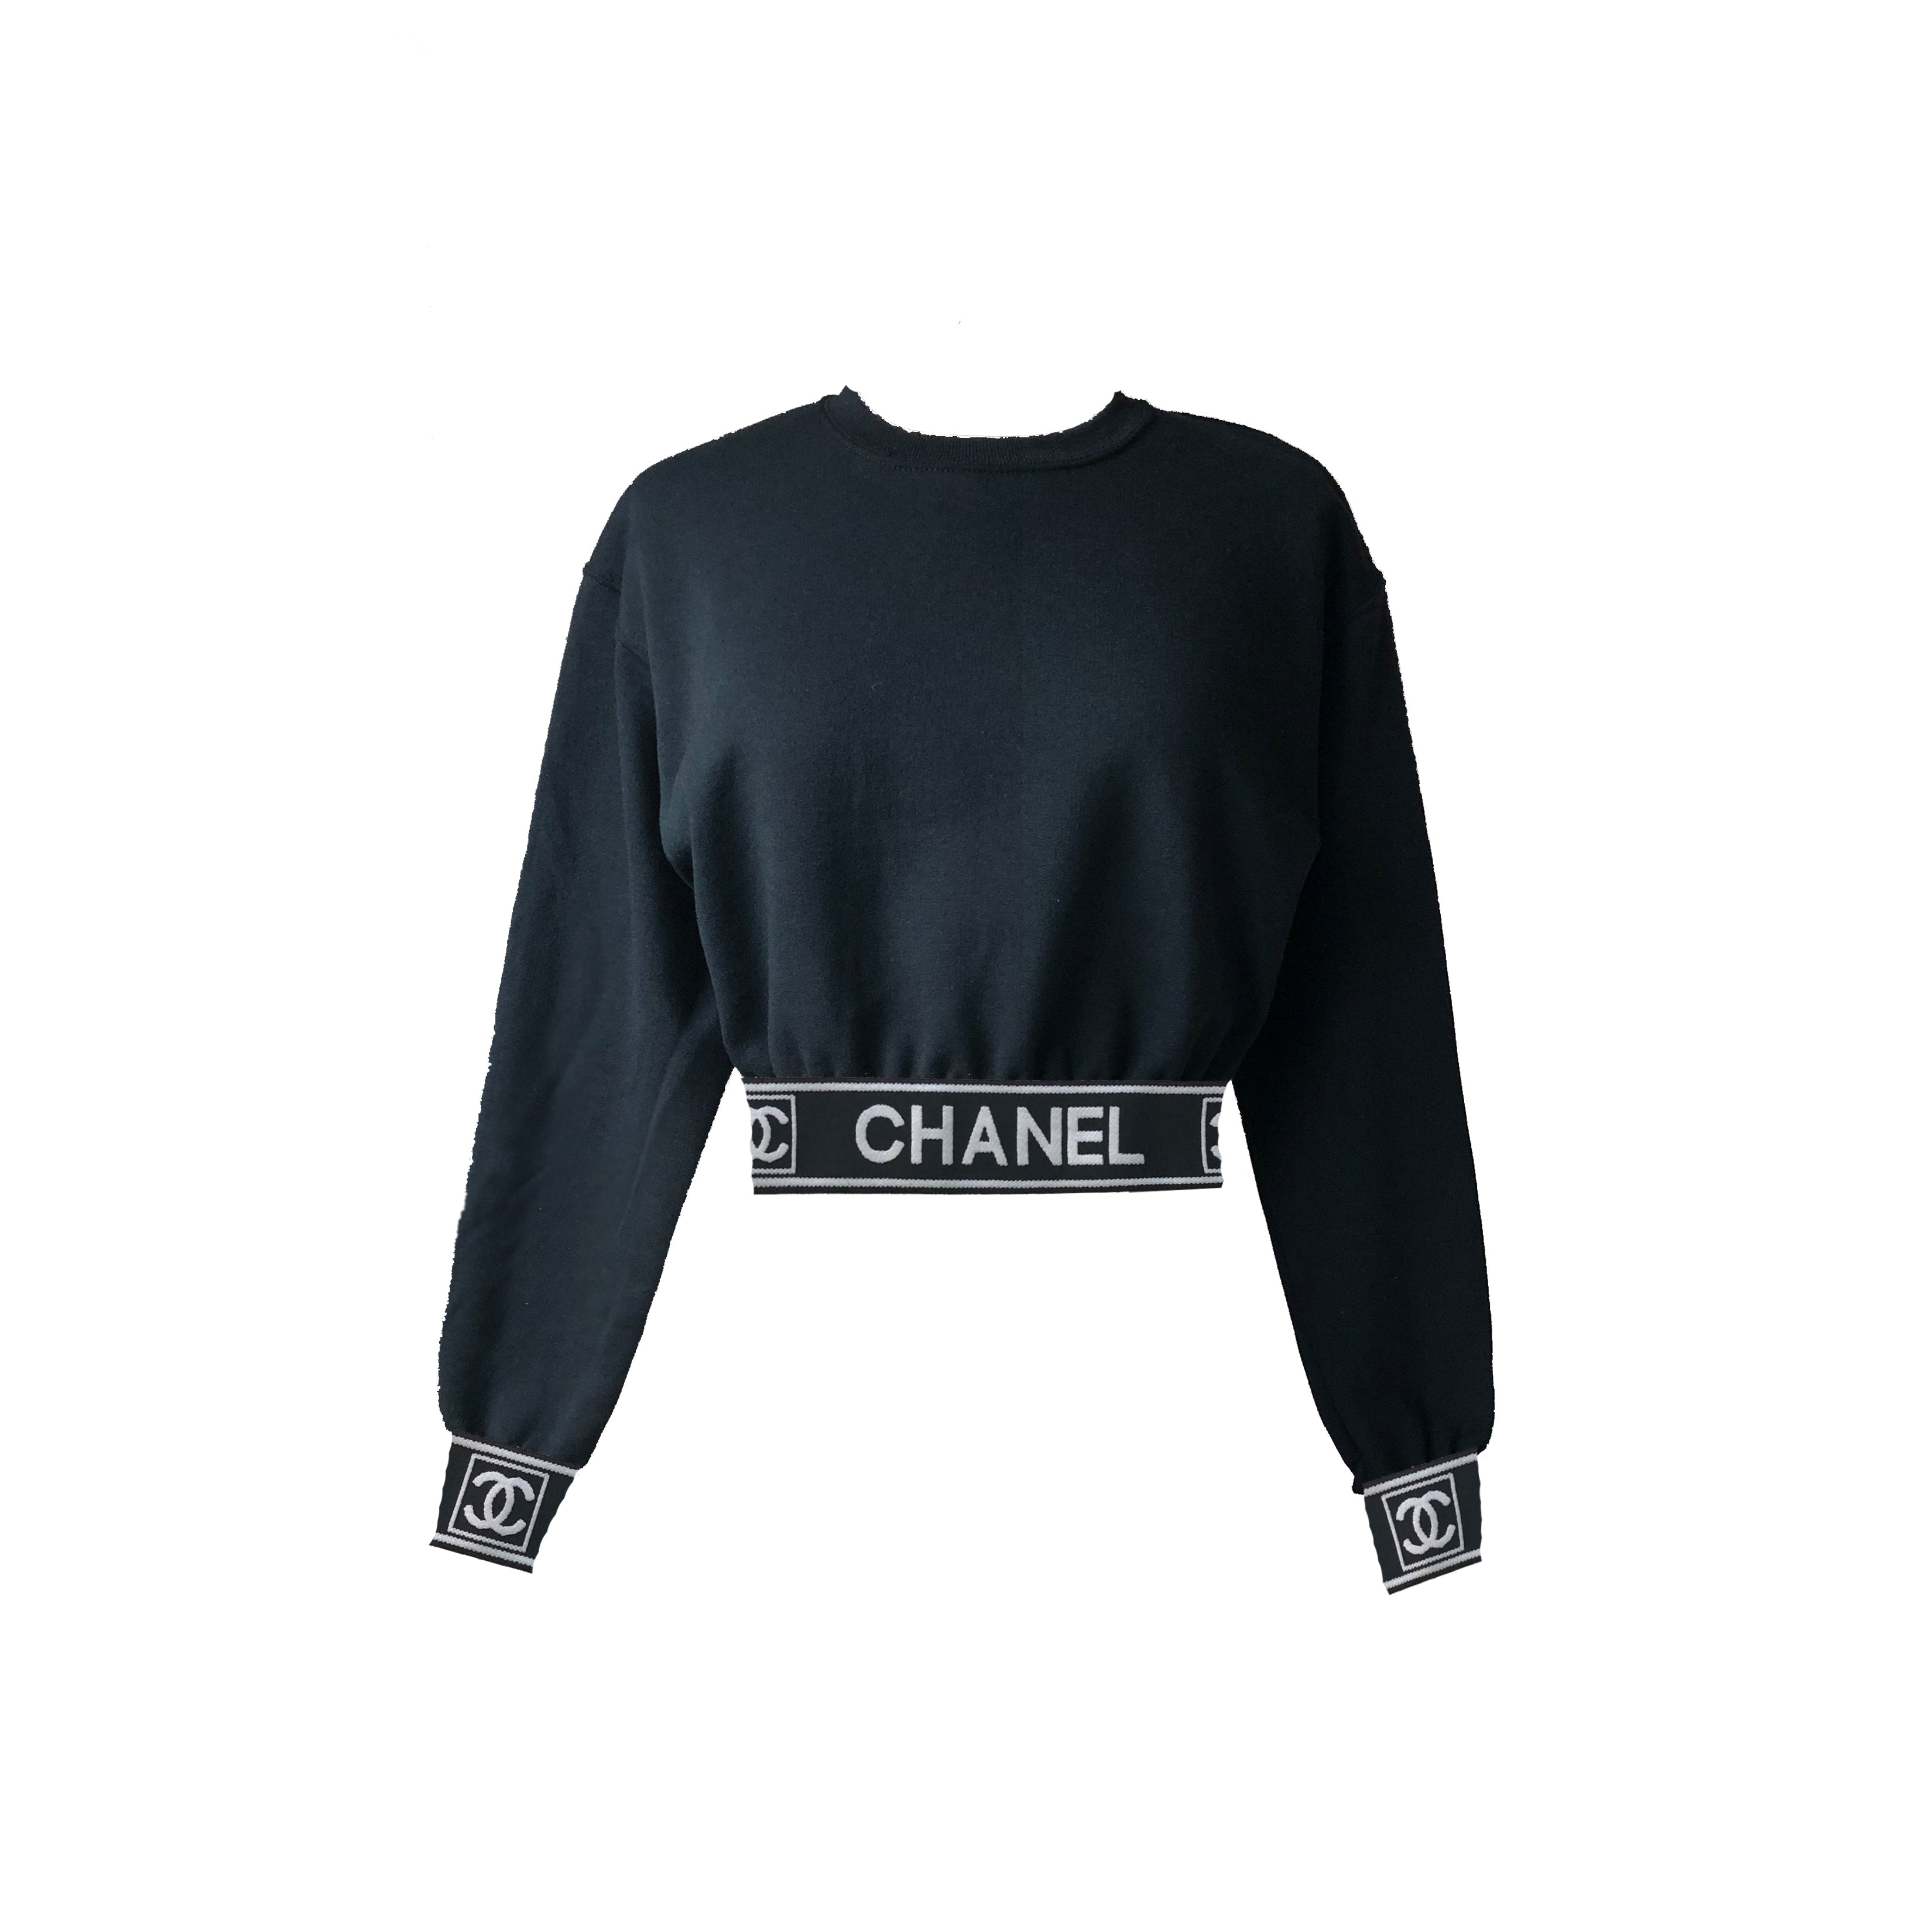 CHANEL, Tops, Chanel Crop Top